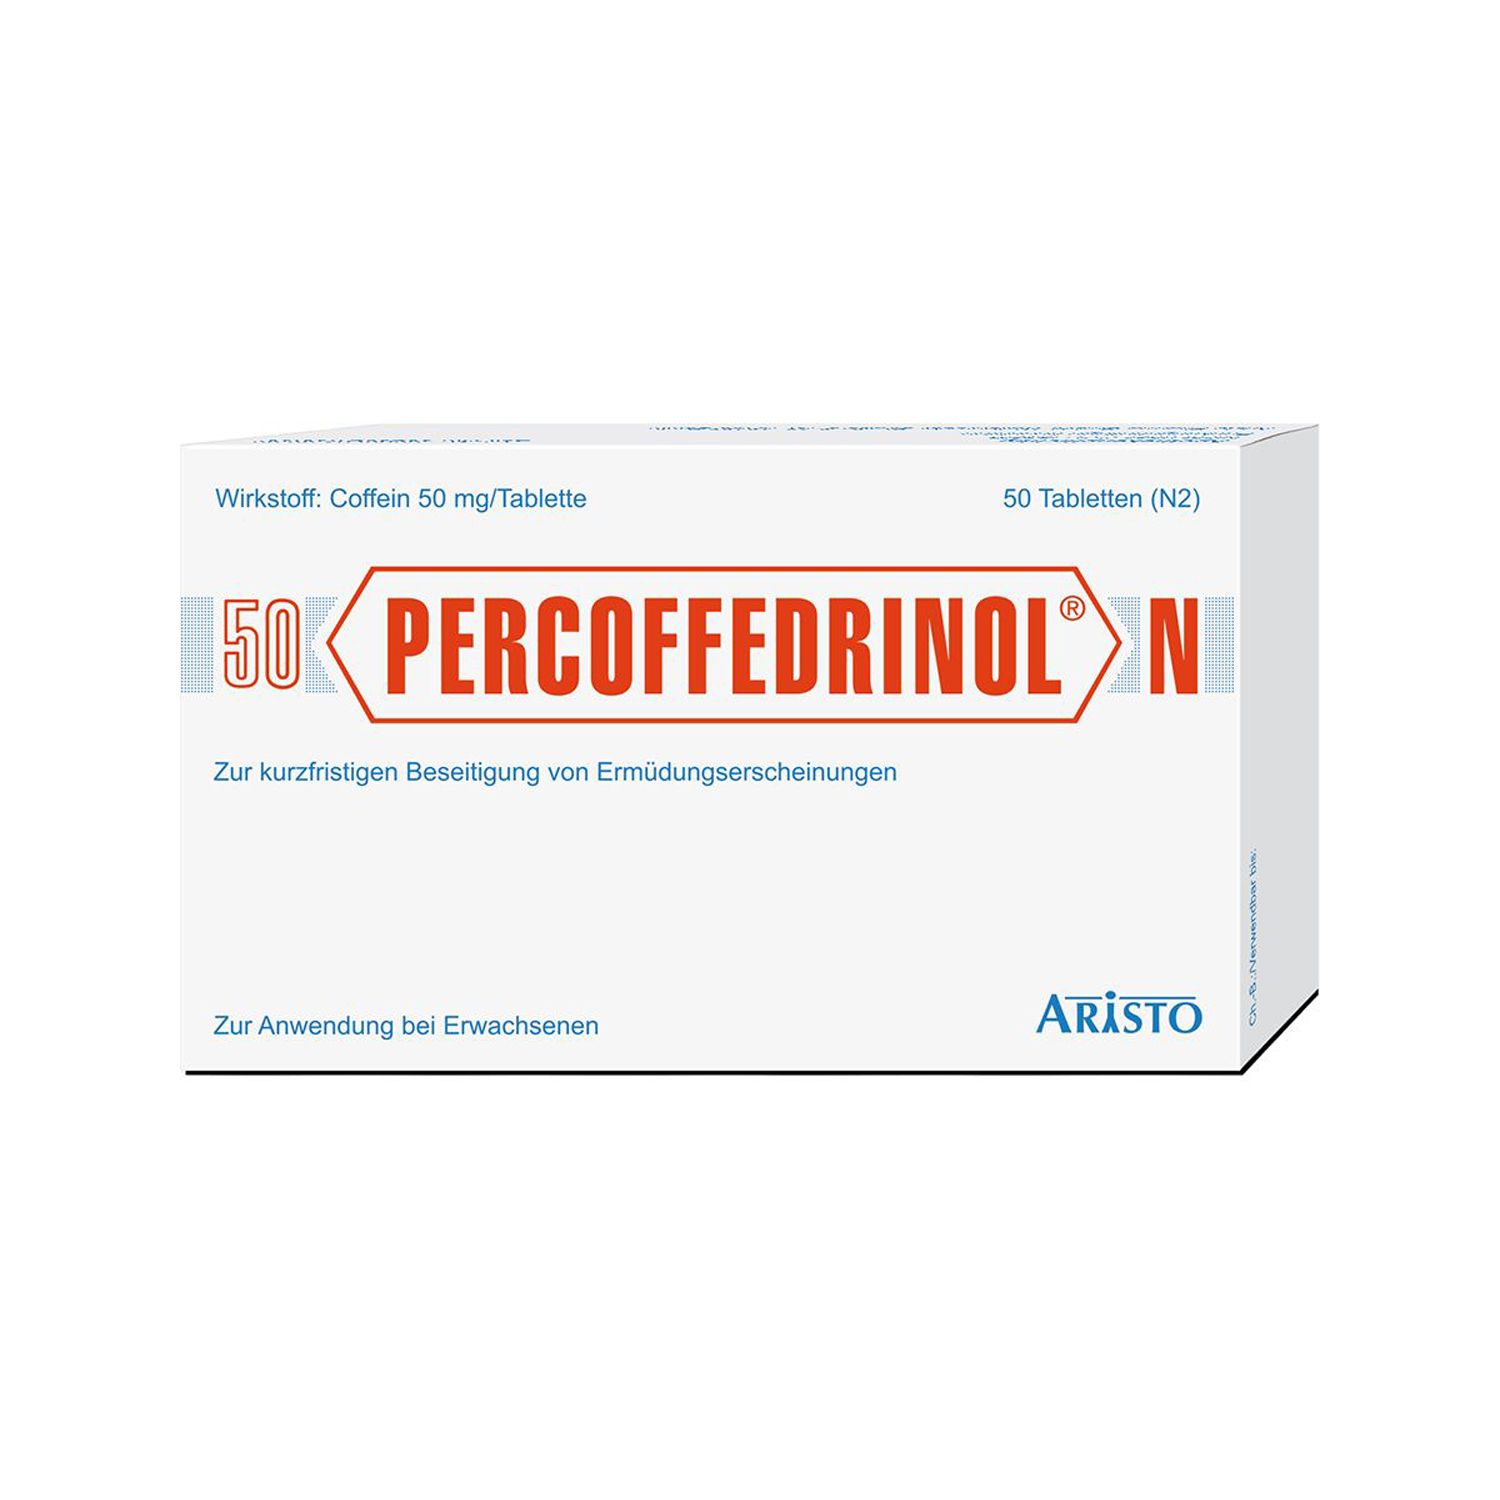 Percoffedrinol®N Tabletten